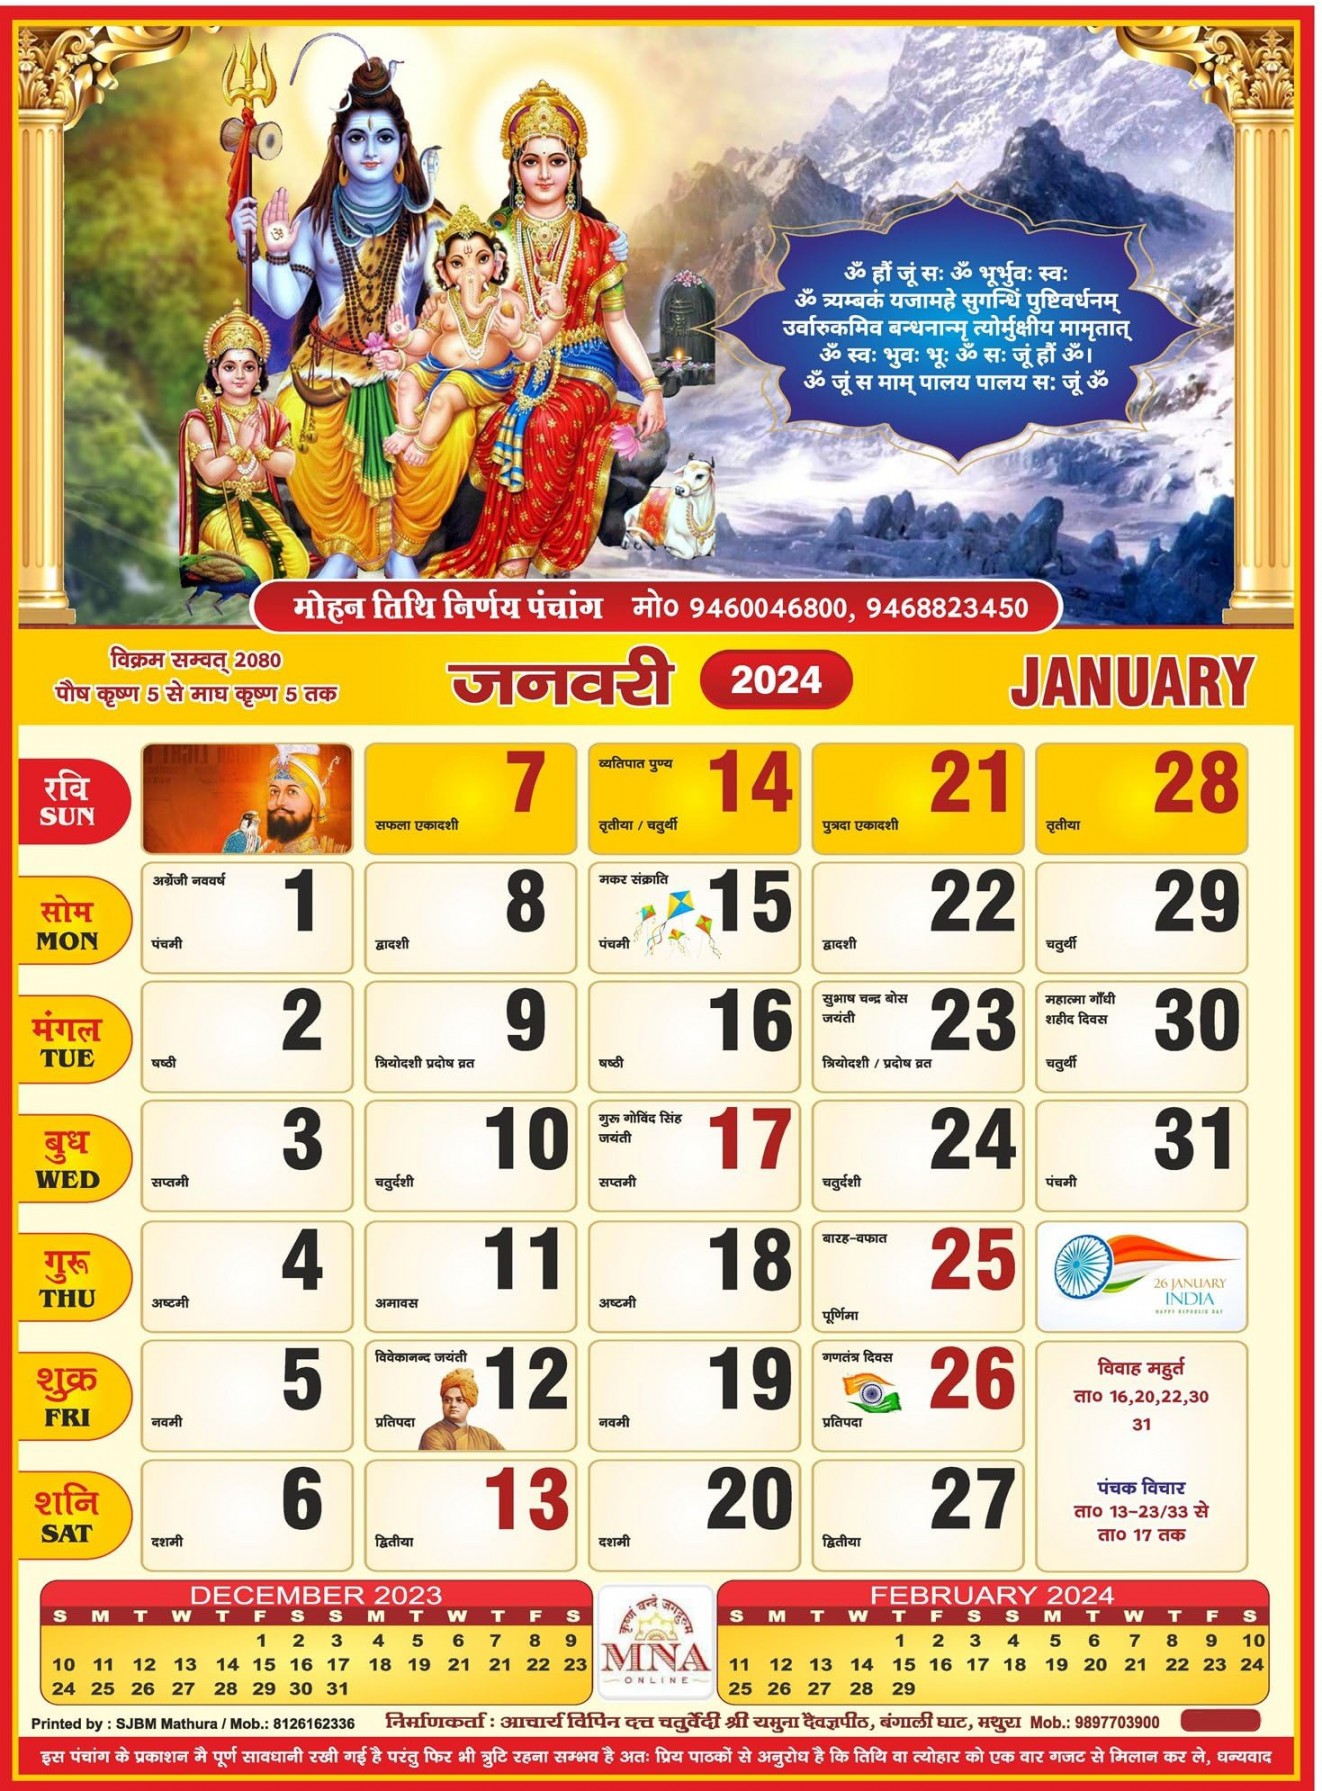 MNA ONLINE Mohan Tithi Nirnaya Panchang / Hindu Wall Calendar